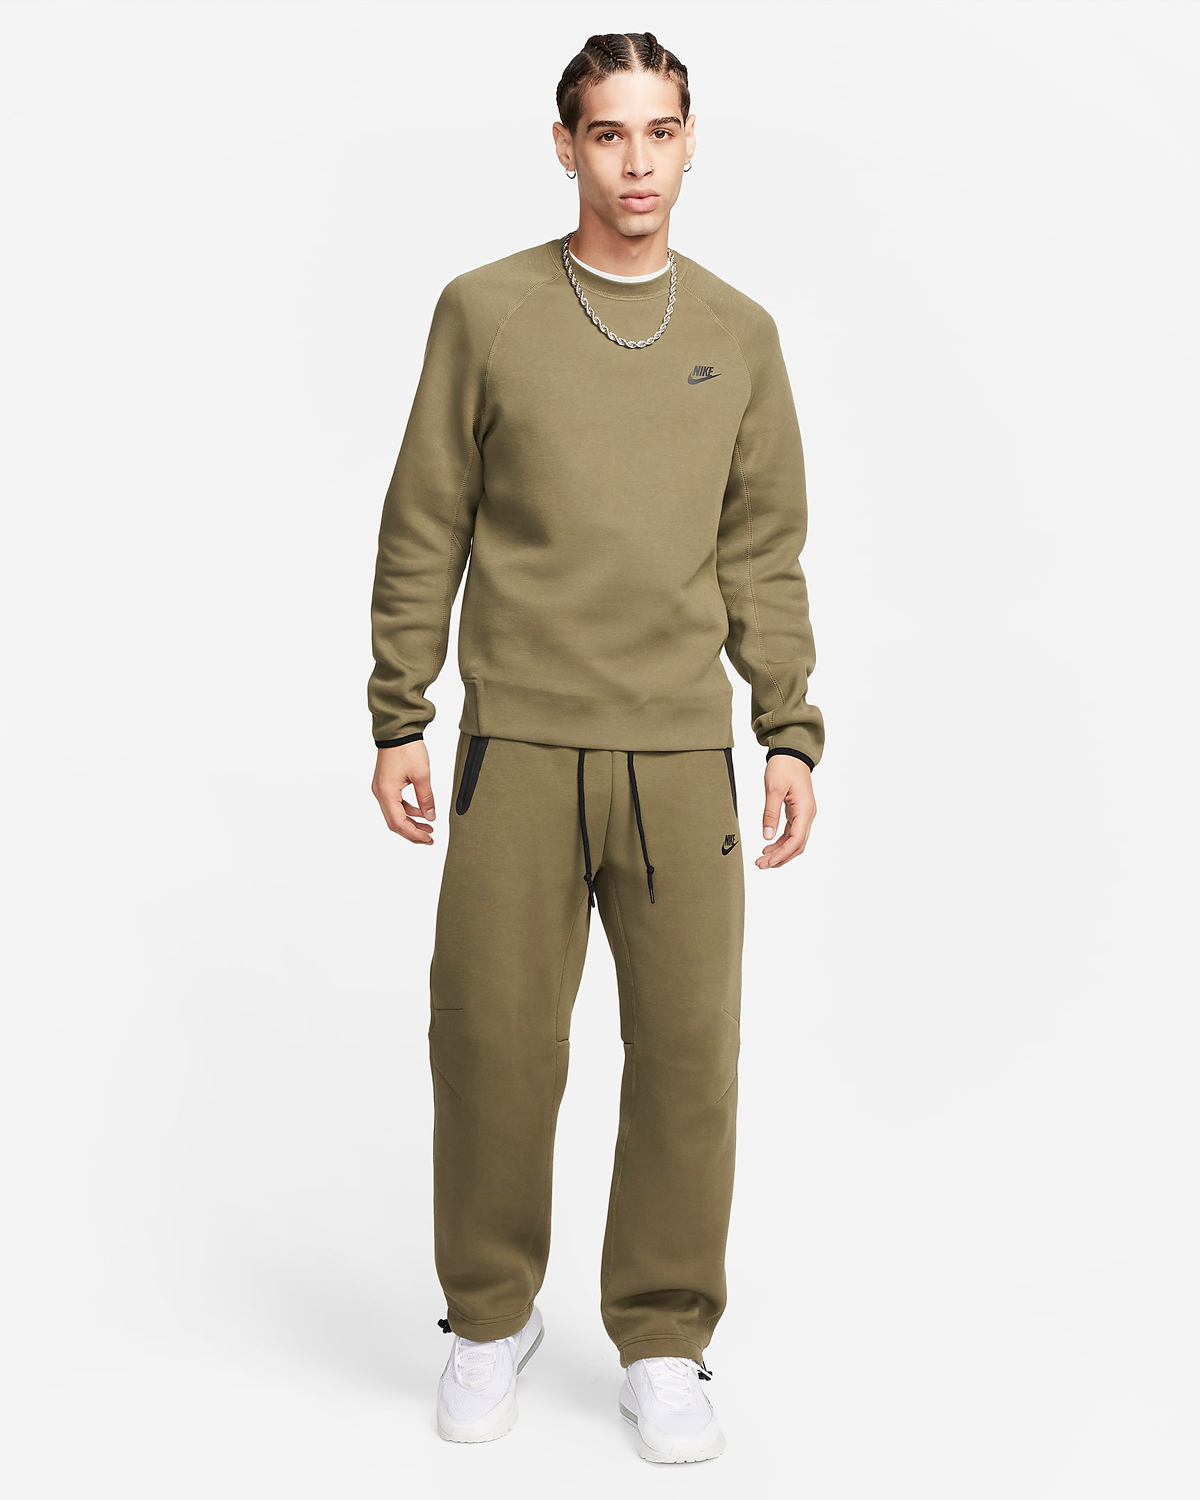 Nike-Tech-Fleece-Crew-Sweatshirt-Medium-Olive-Black-Outfit